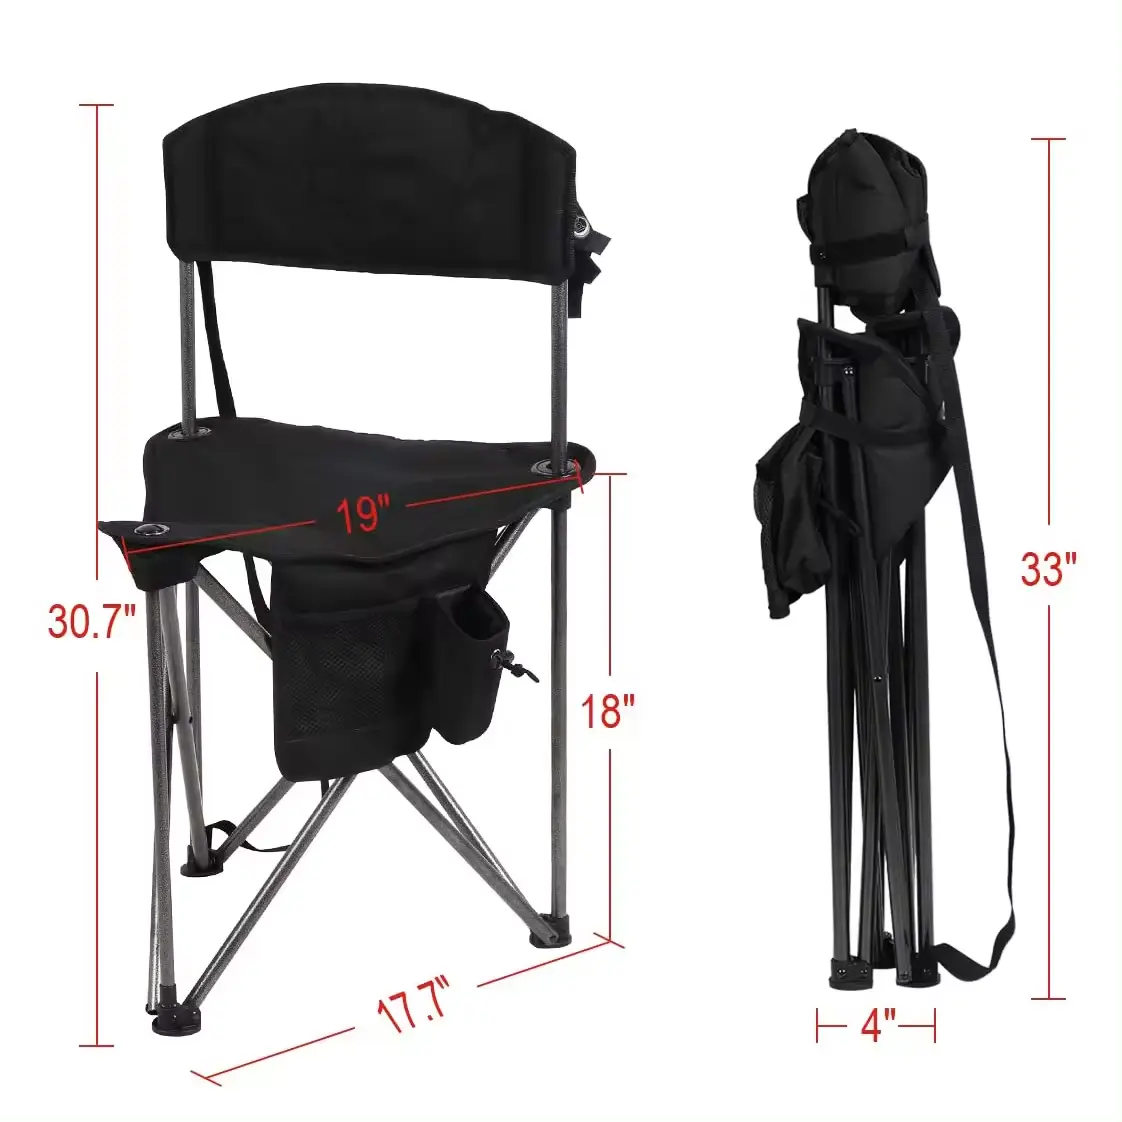 NPOT Ultralight small folding tripod stool camping tripod folding chair hunting folding chair